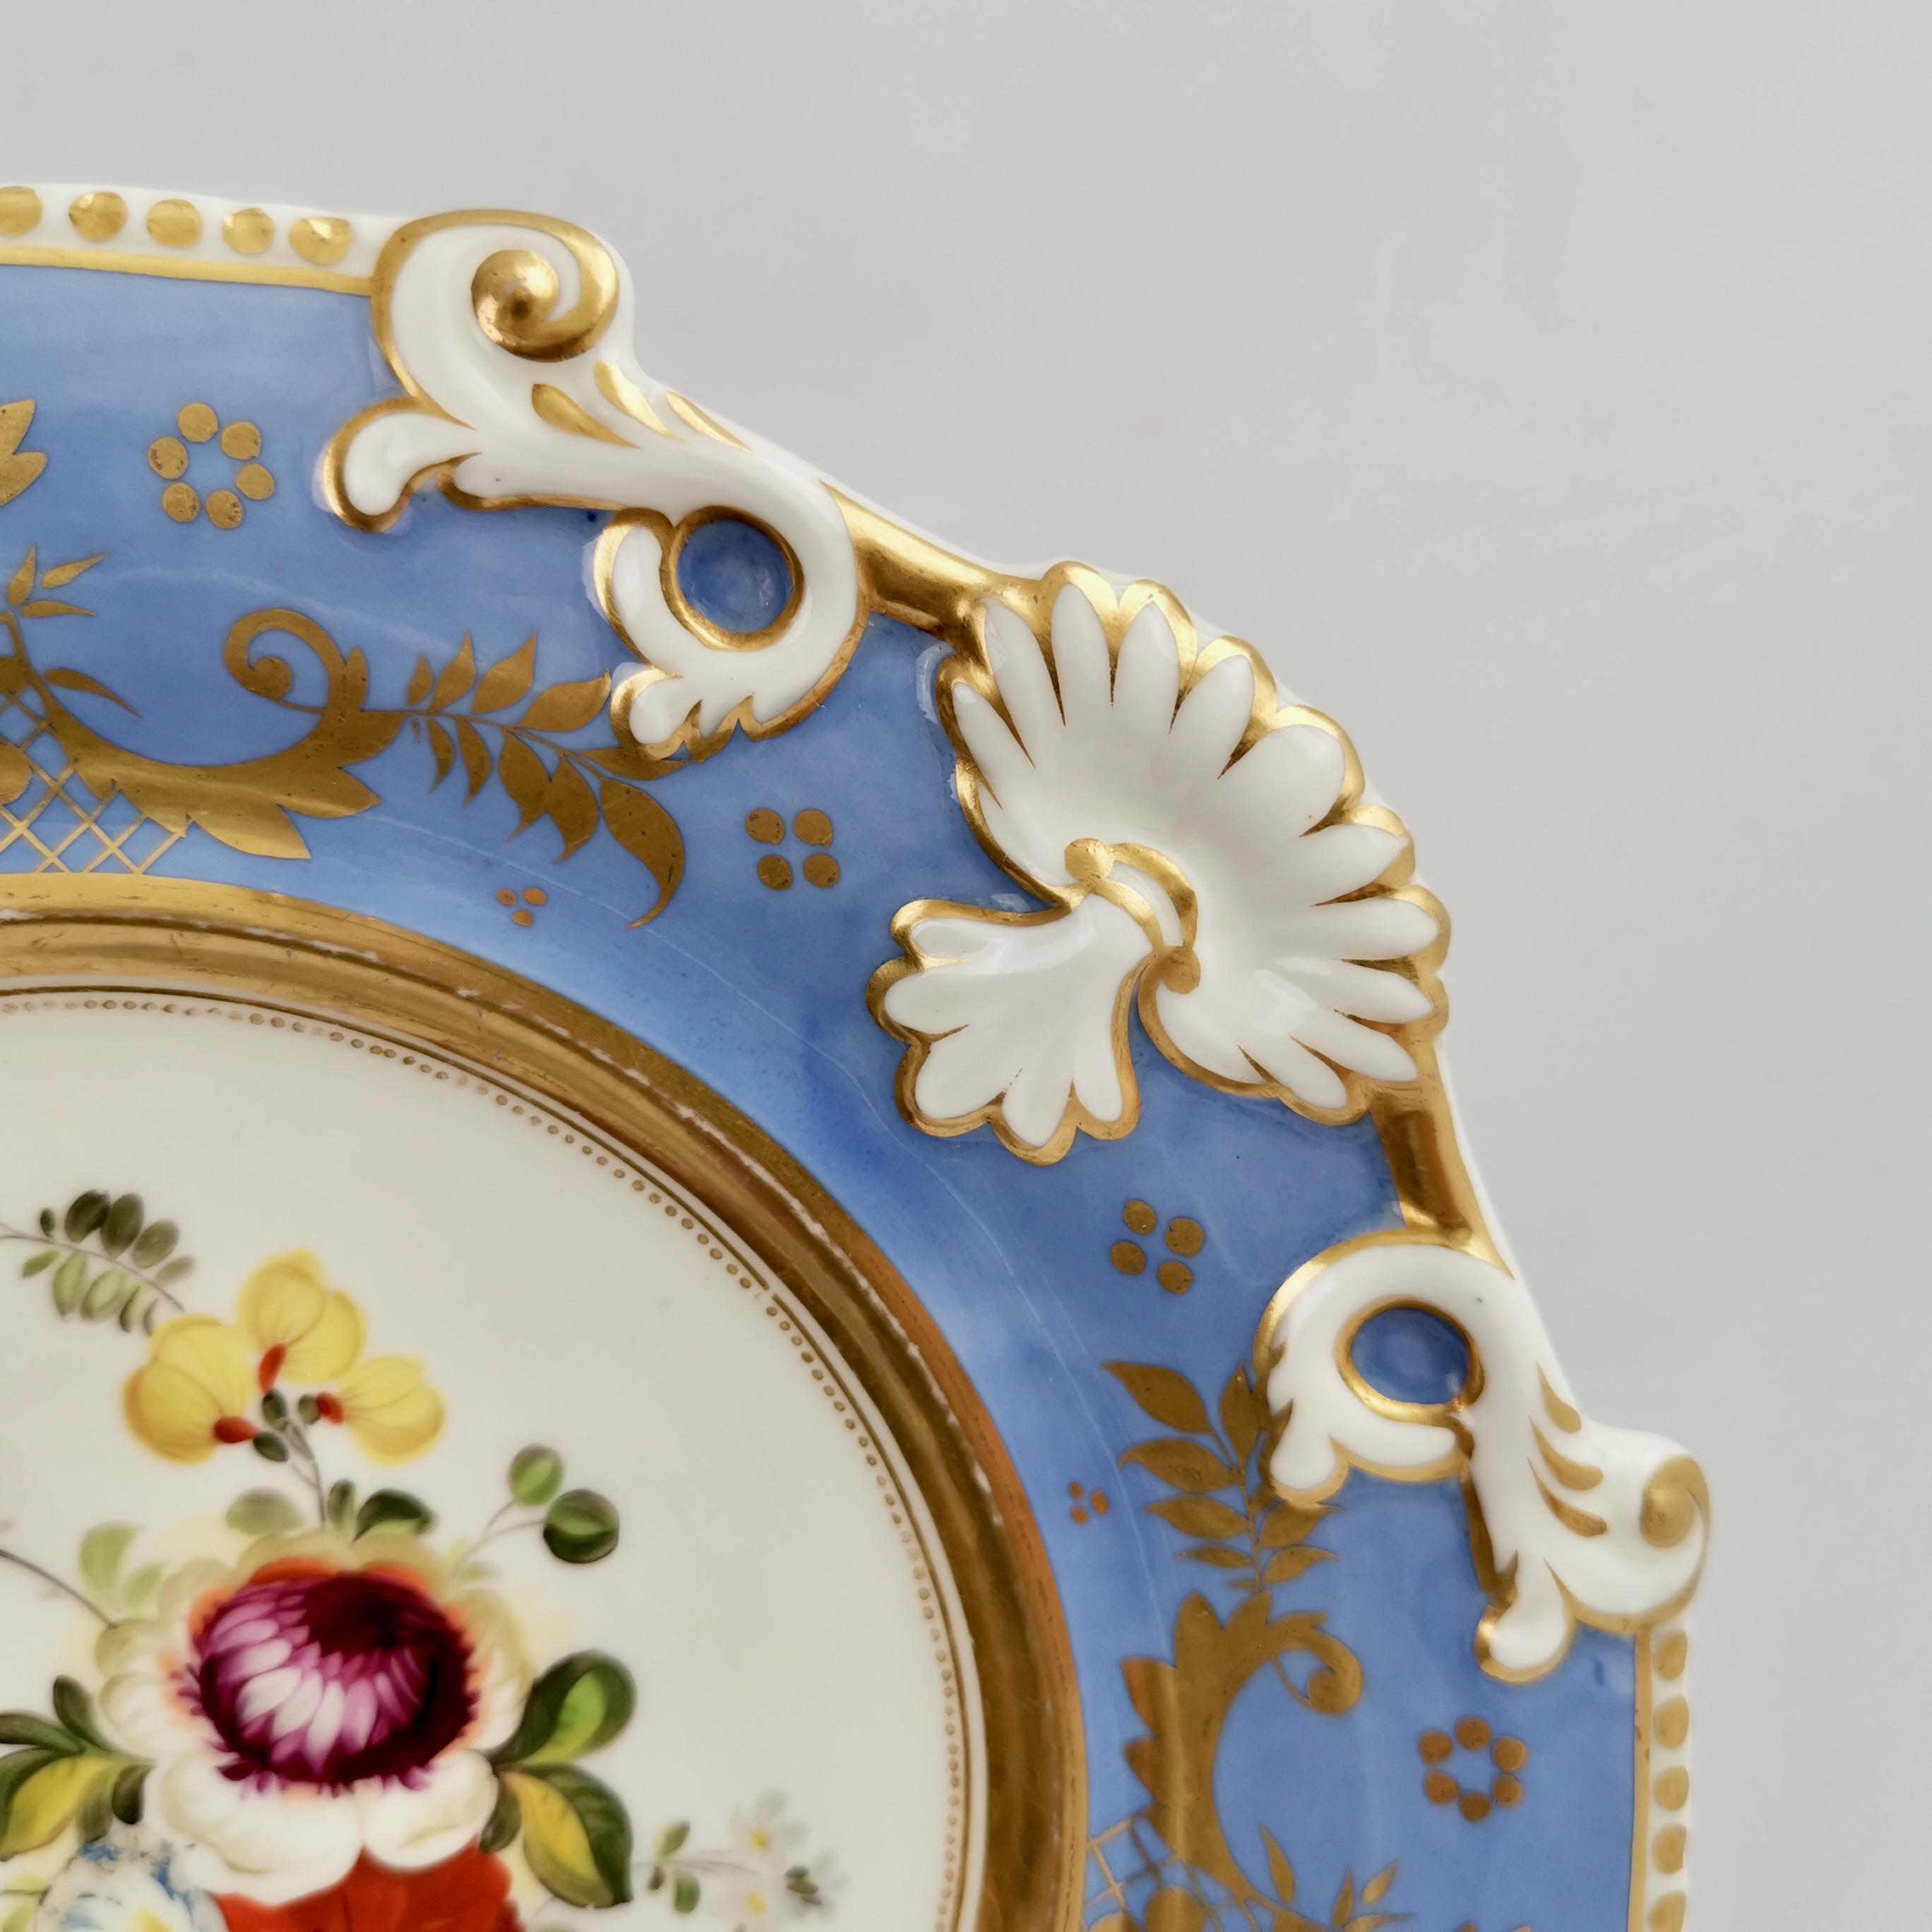 Machin Porcelain Plate, Periwinkle Blue with Flowers, Regency ca 1820 2